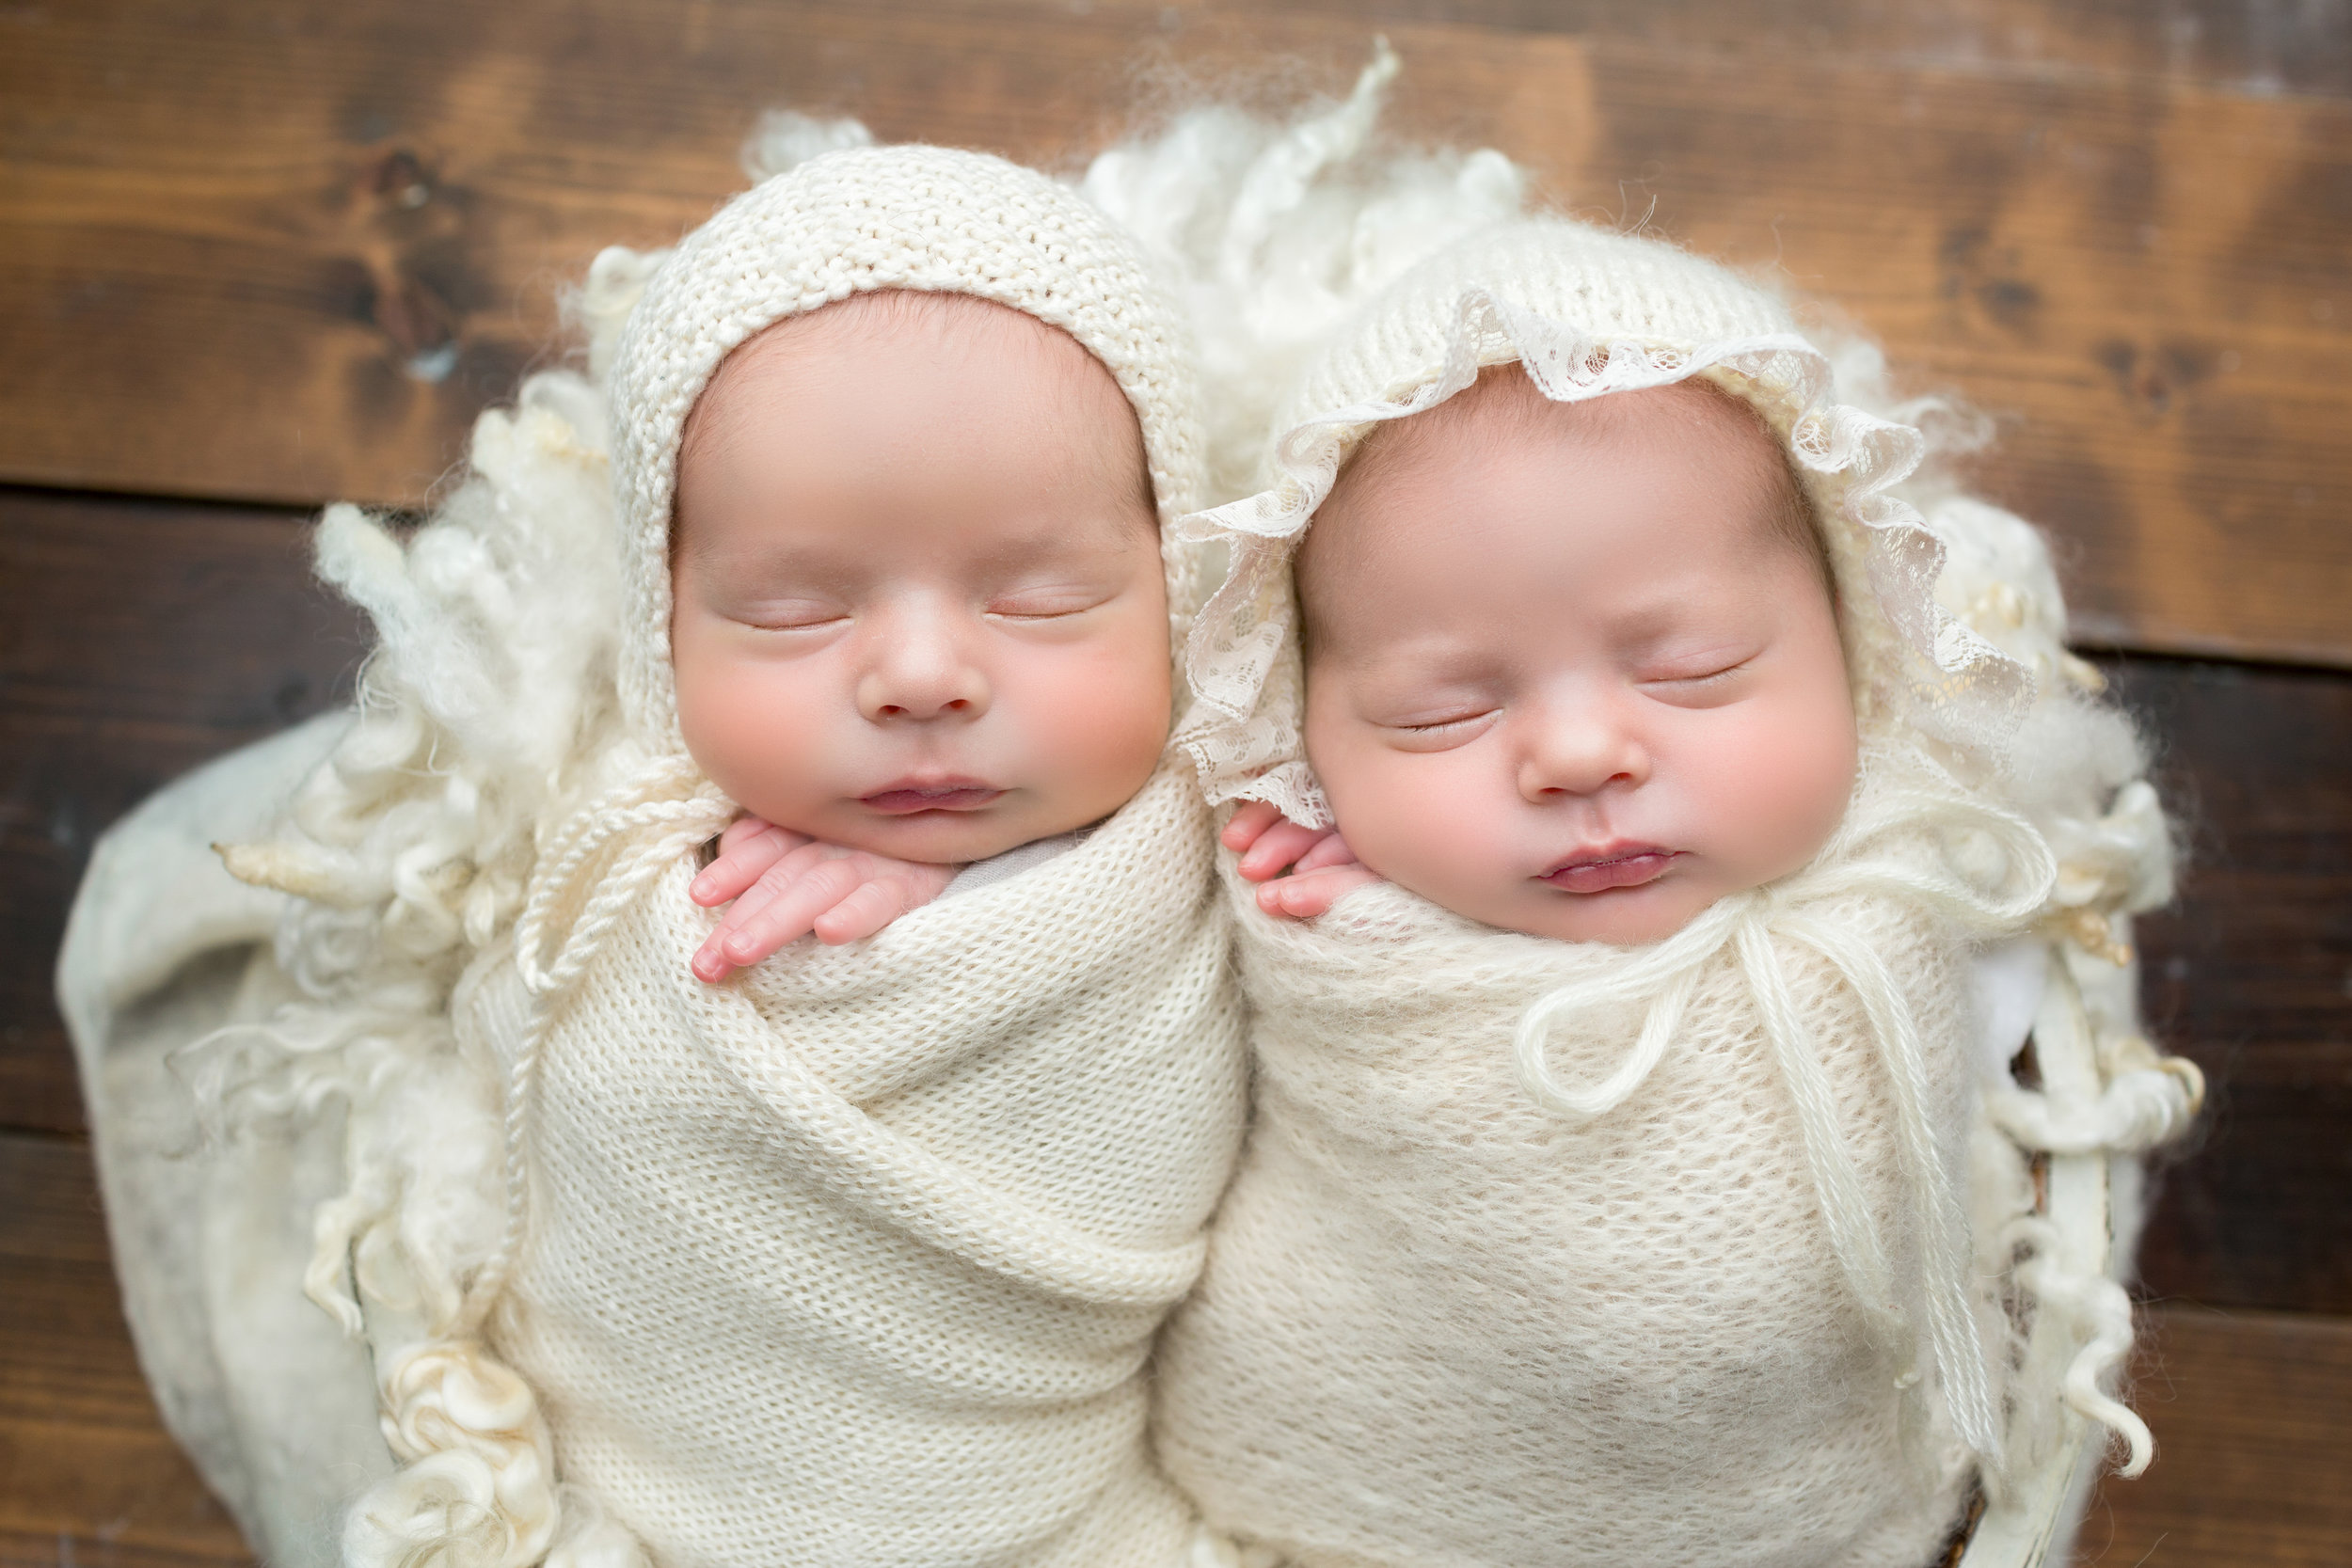 boy/girl twins in cream wraps sleeping peacefully